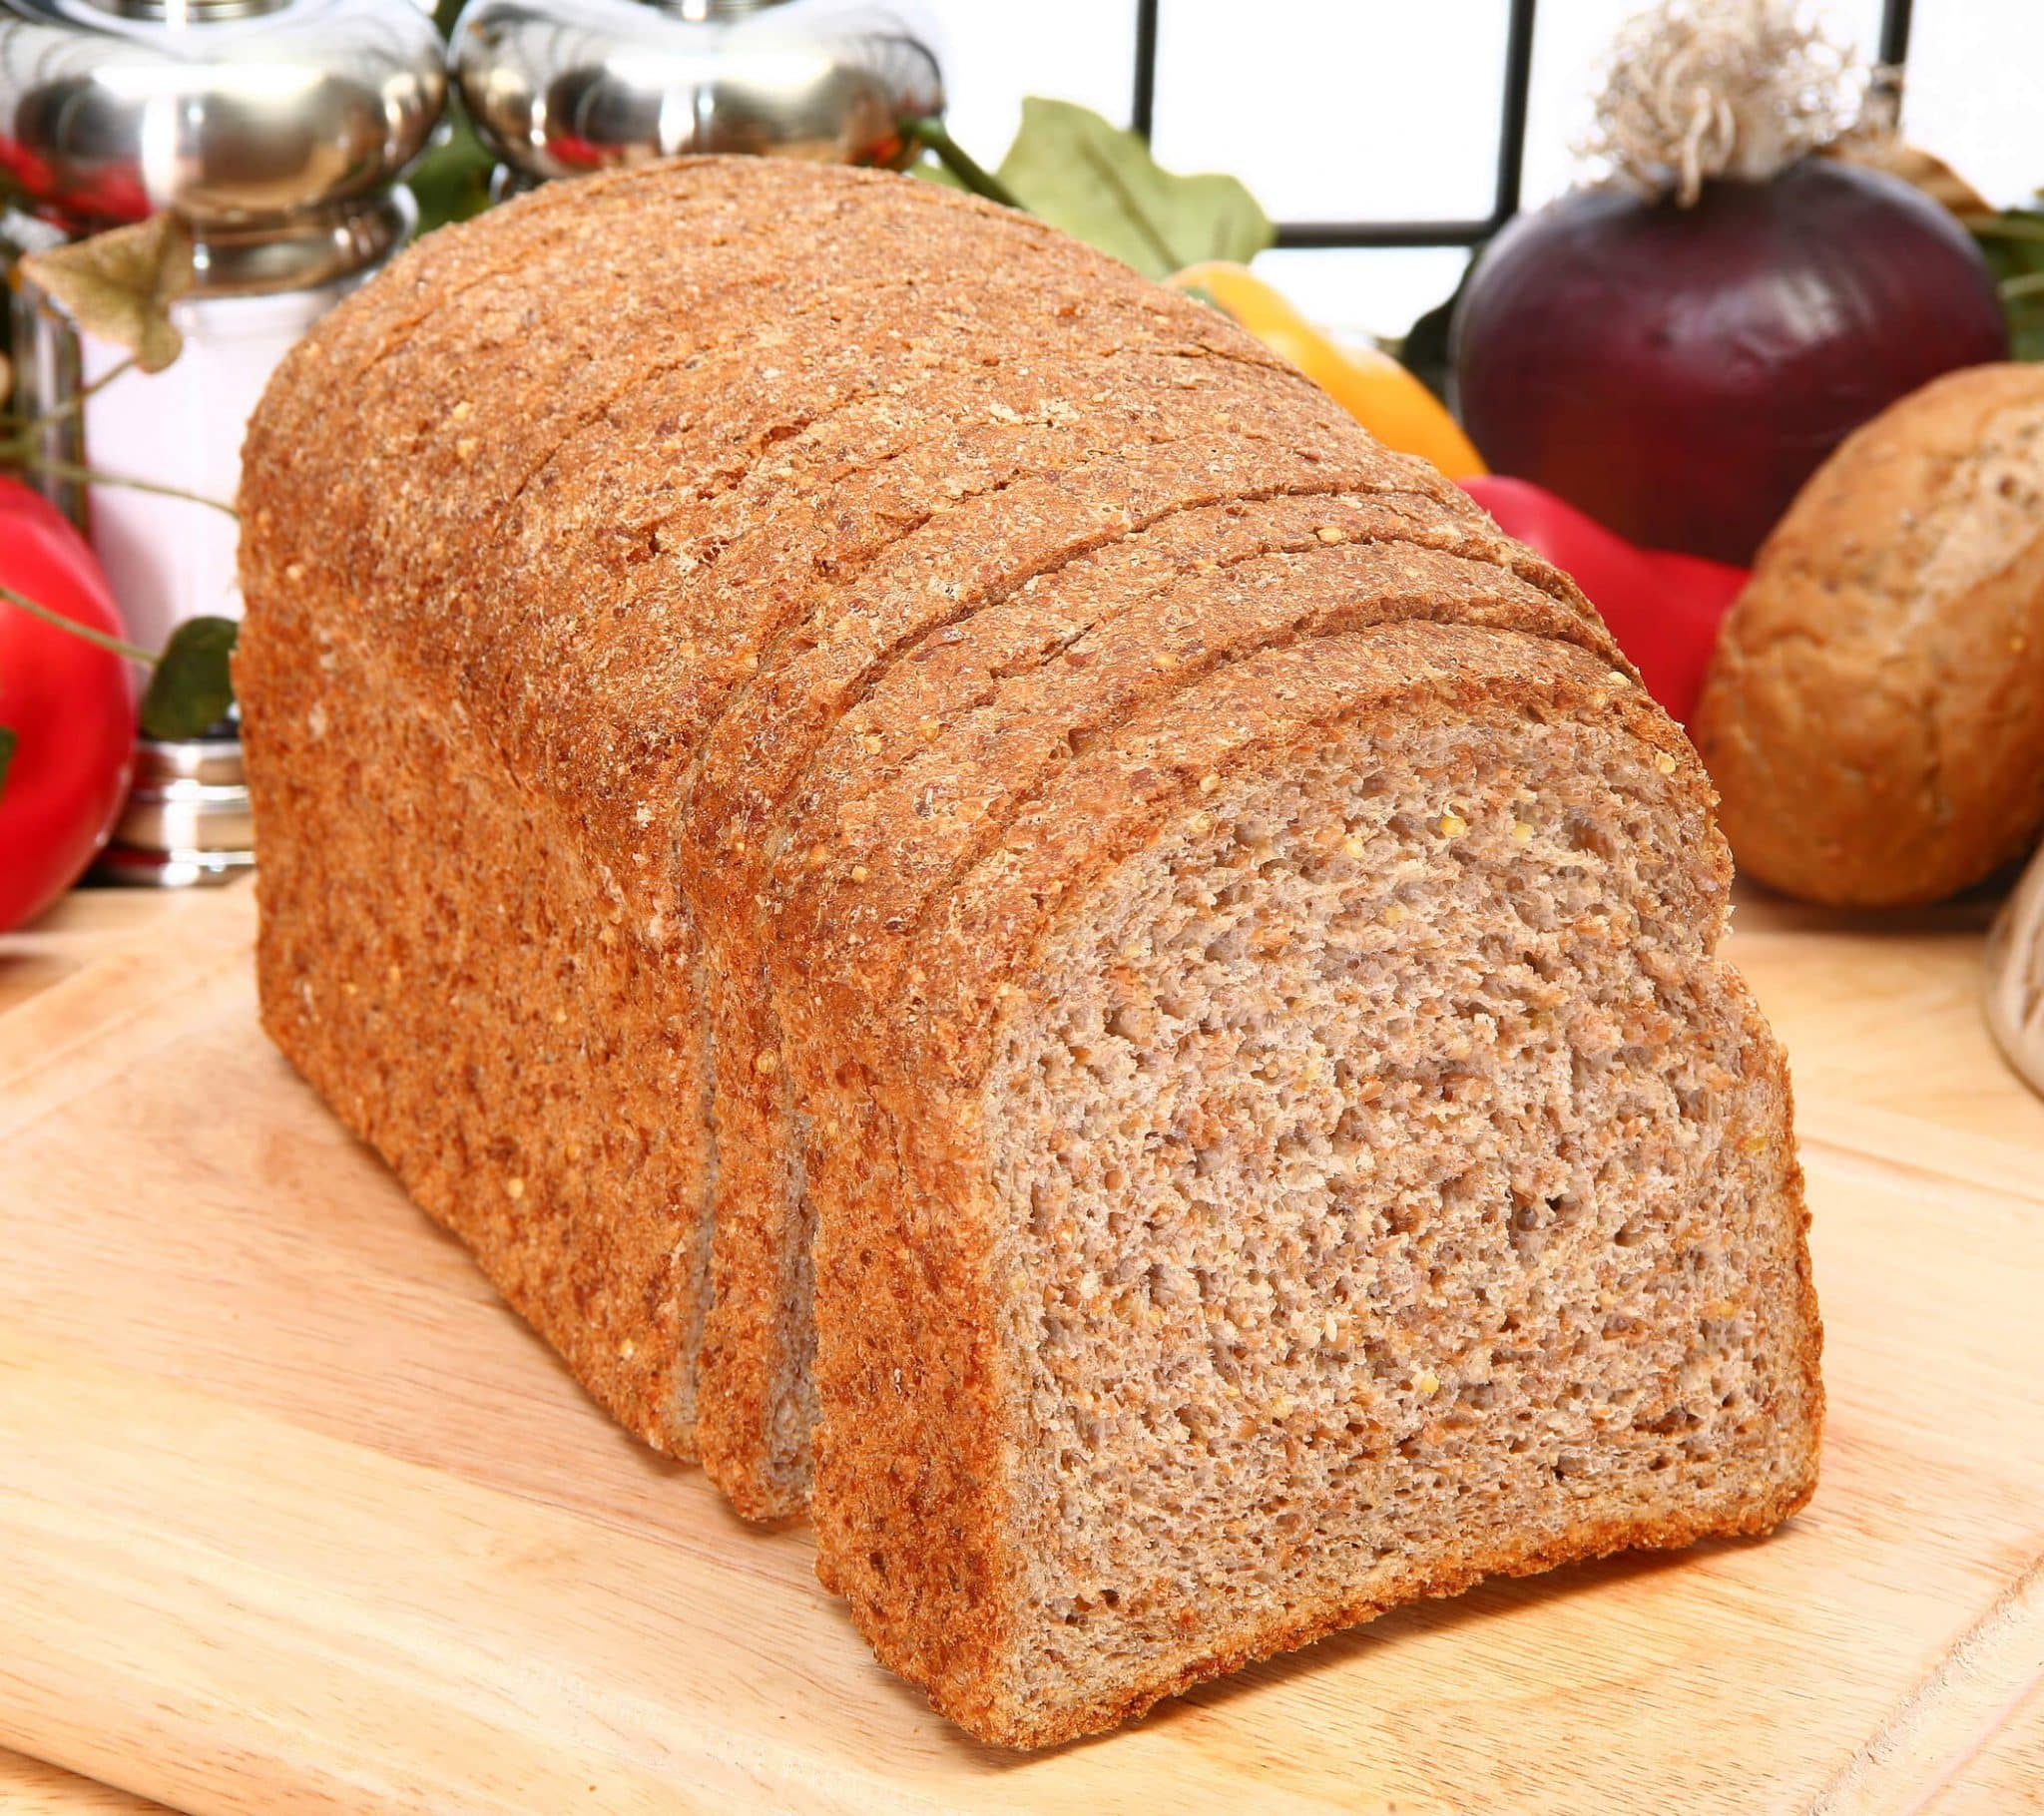 16 Health Benefits of Eating Ezekiel Bread (#Evidence